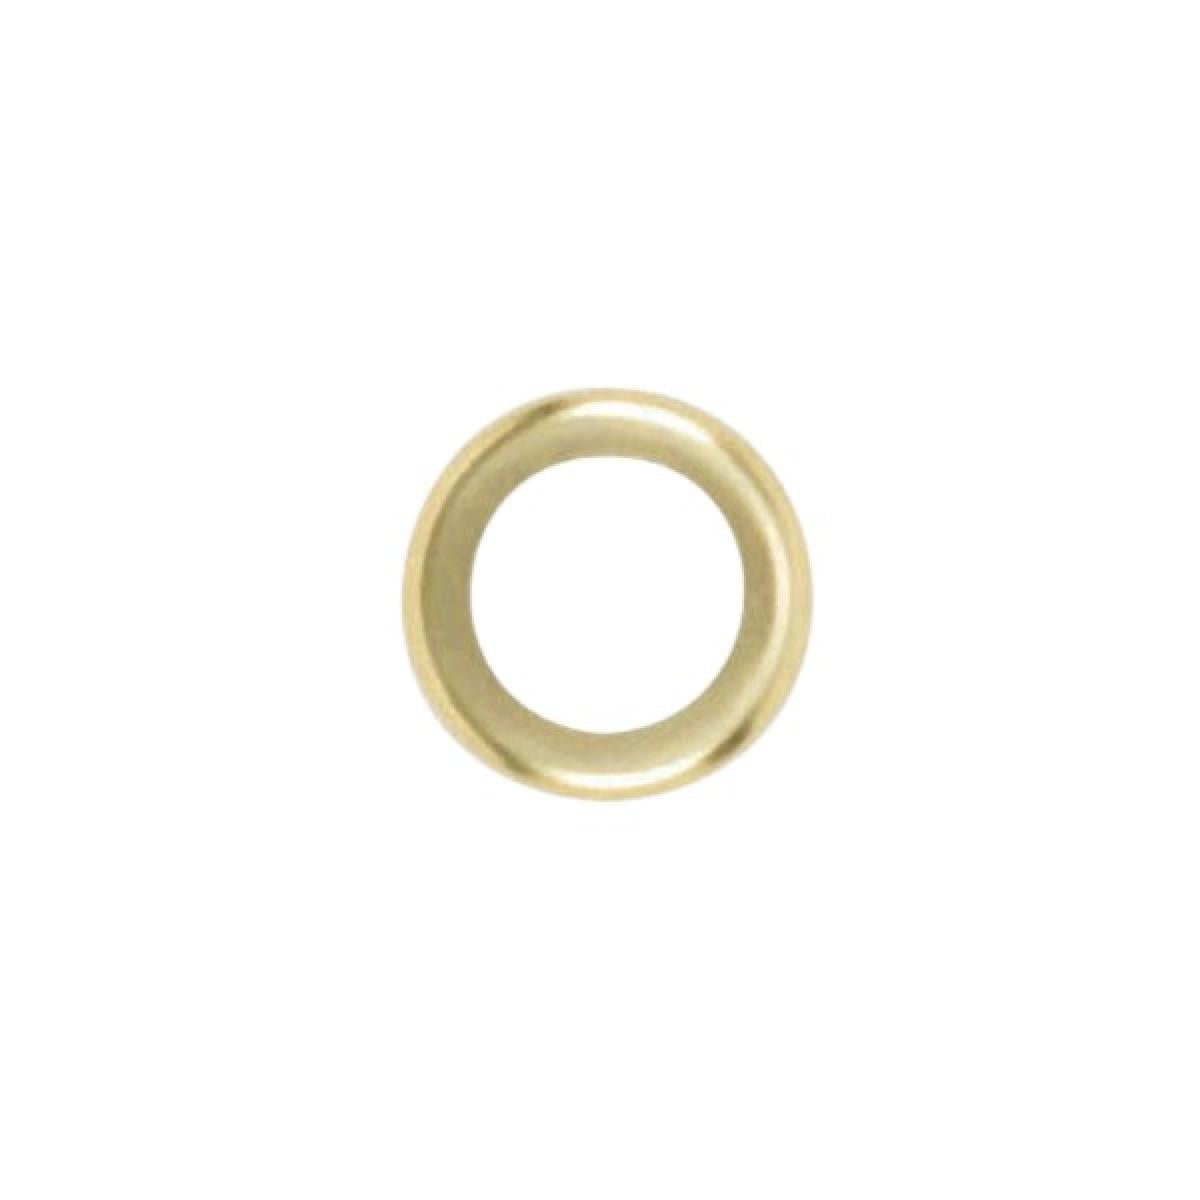 Satco 90-2075 Steel Check Ring Curled Edge 1/4 IP Slip Brass Plated Finish 1-3/4" Diameter